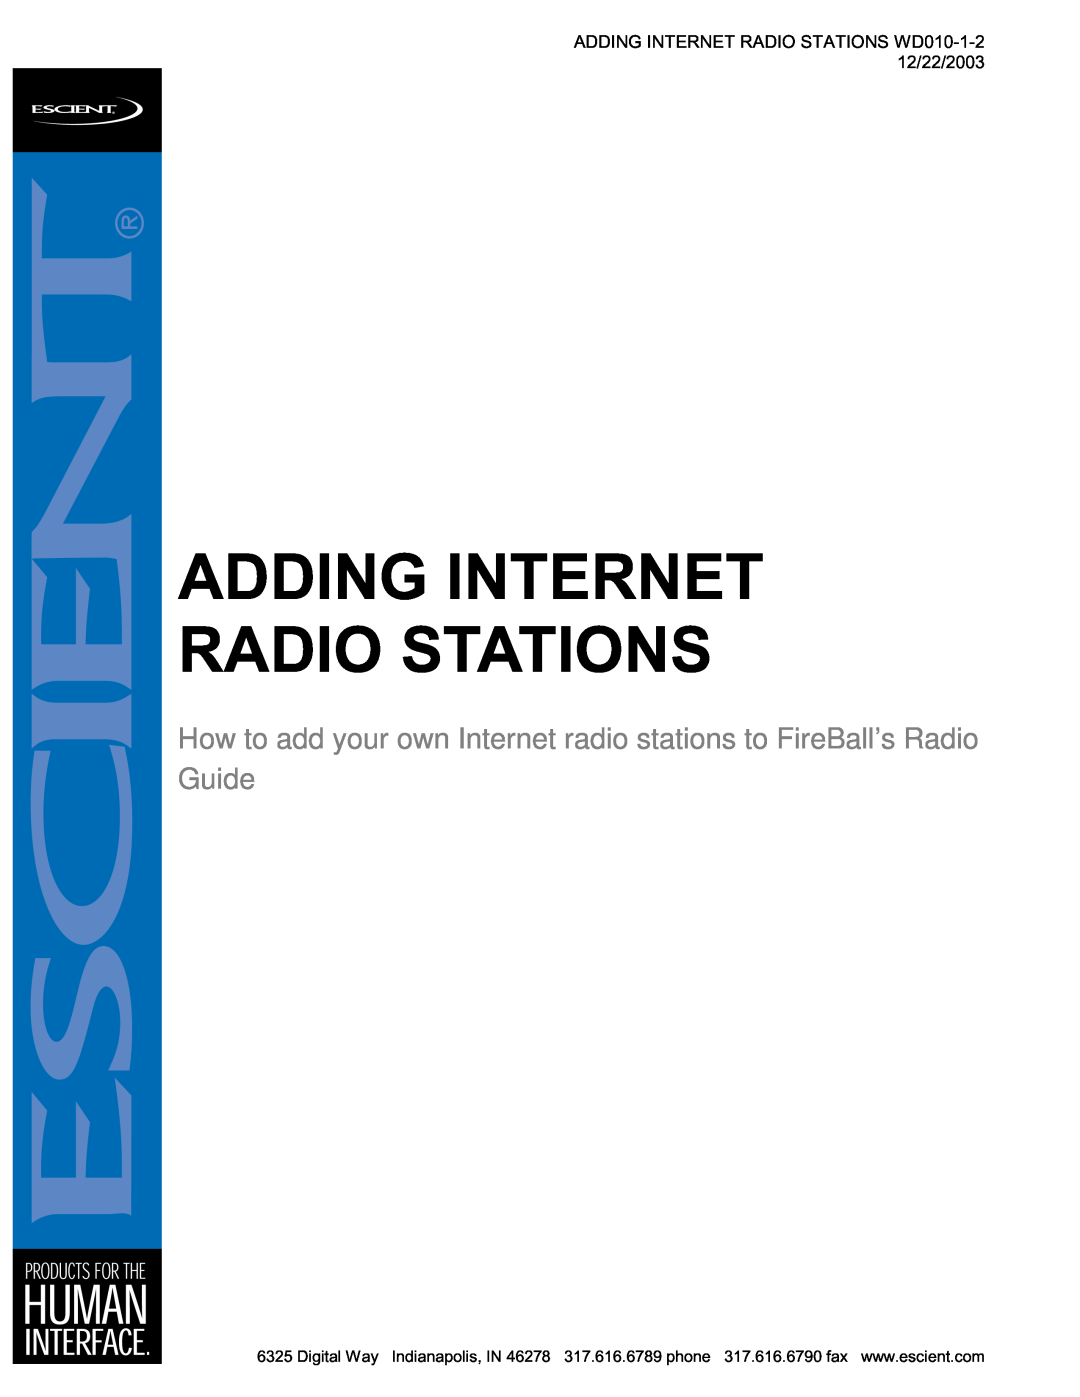 Escient MP-150 manual Adding Internet Radio Stations 